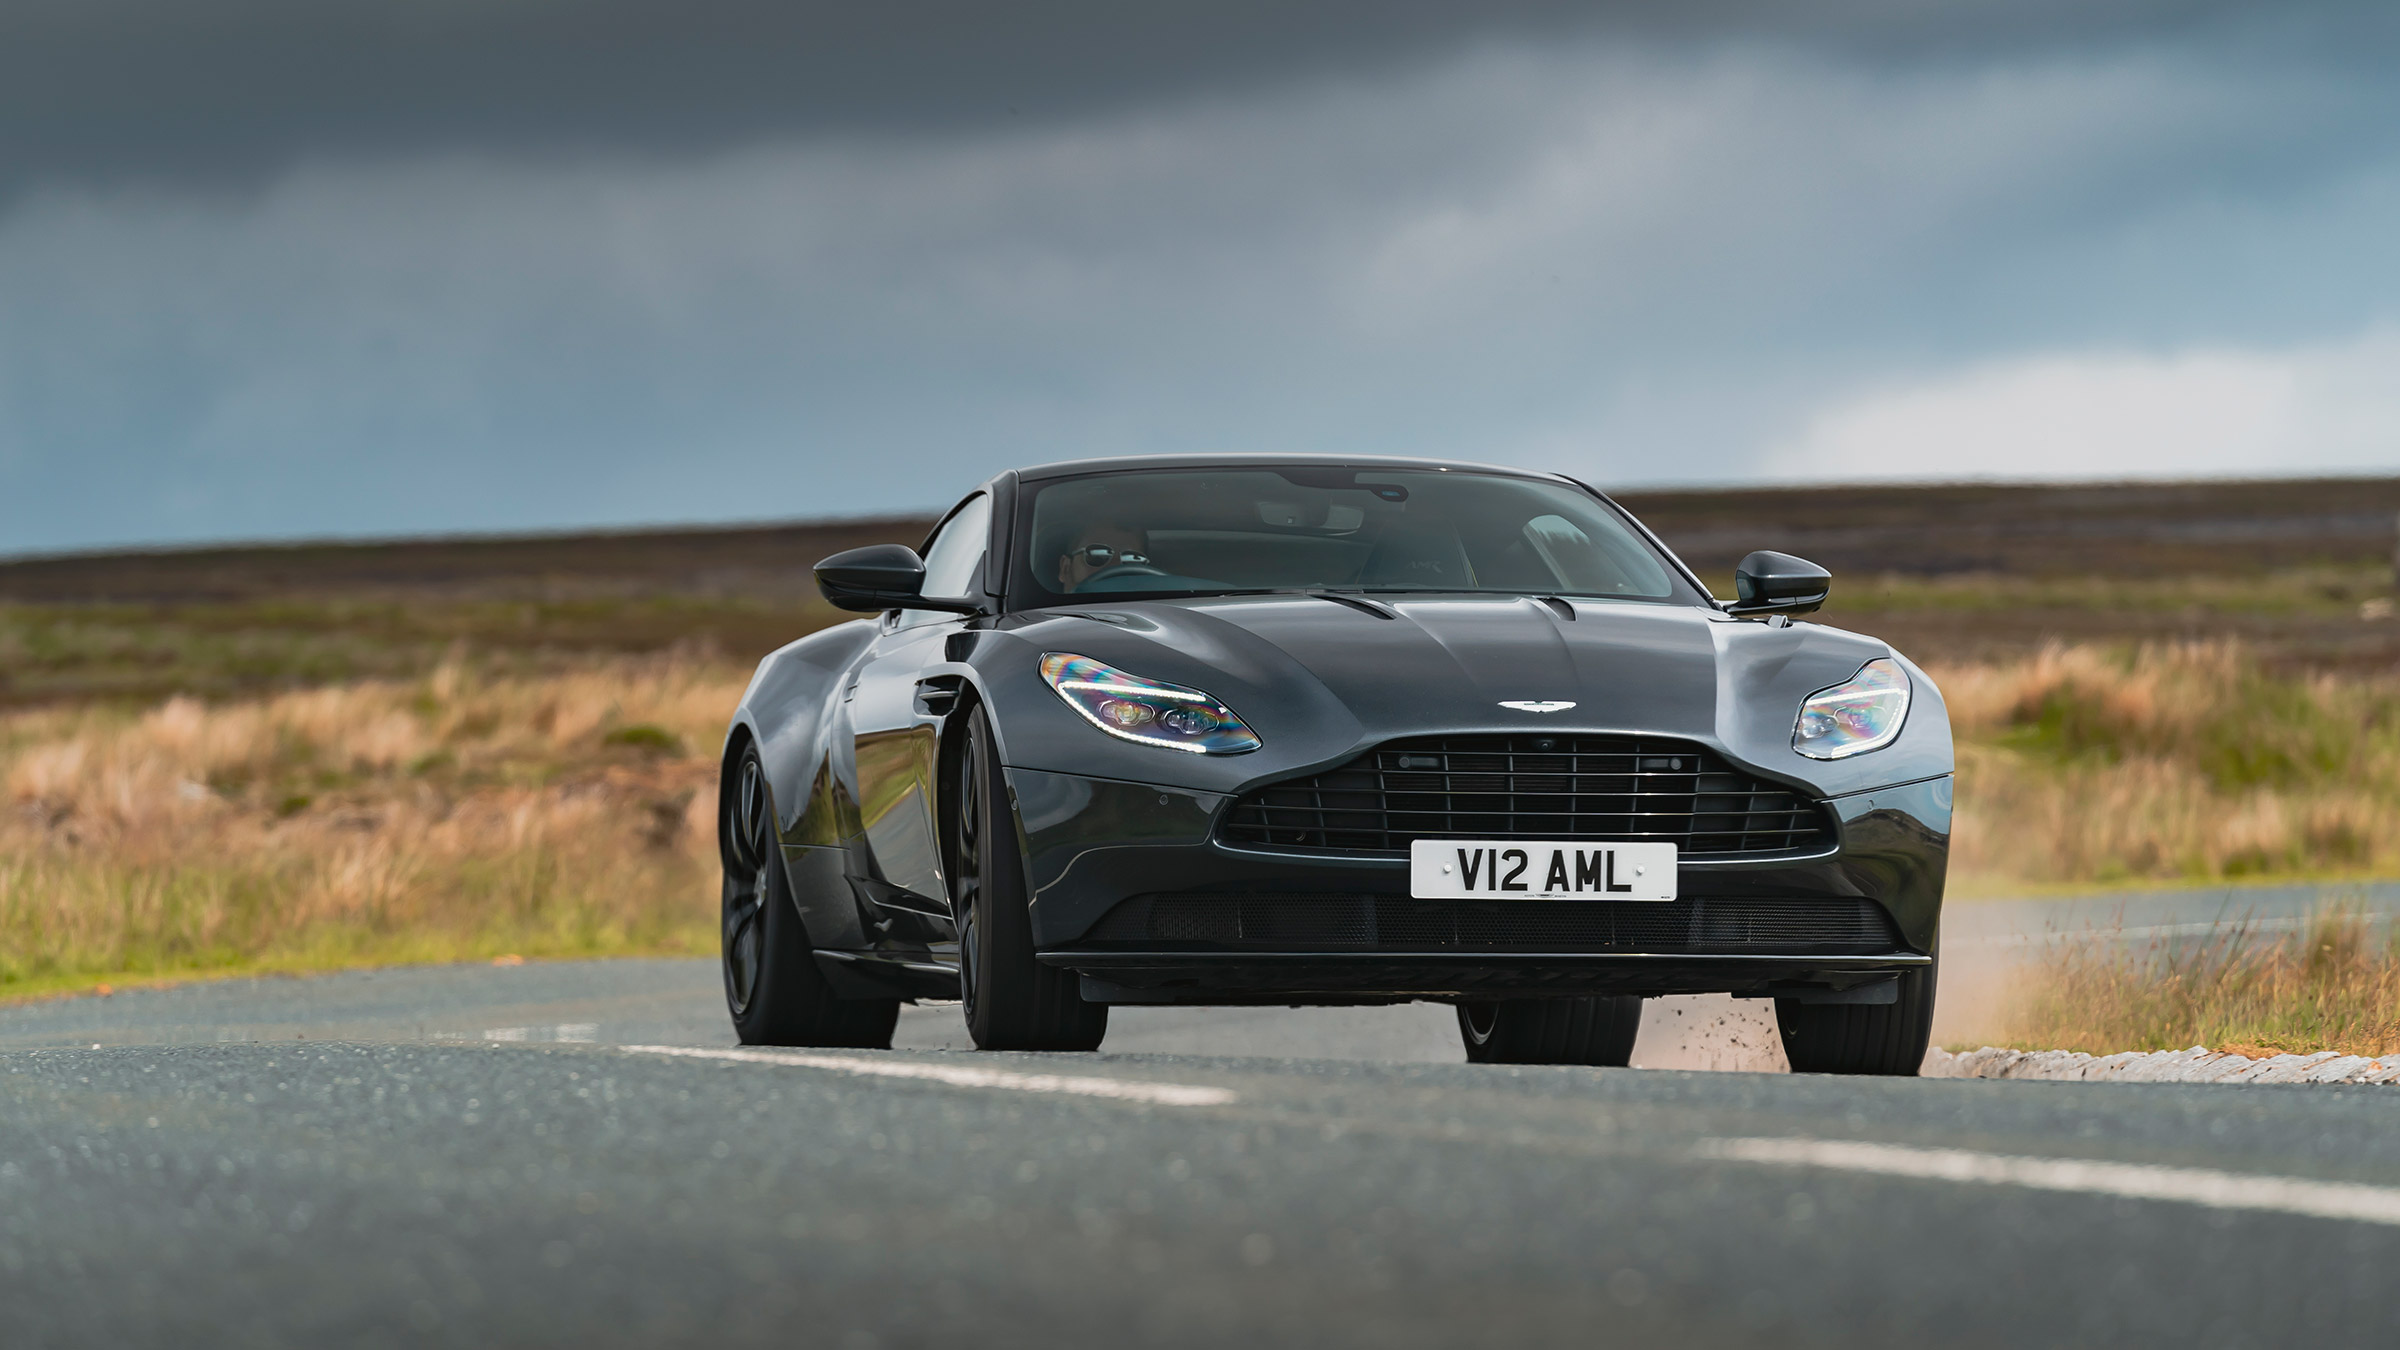 Aston Martin DB11 News and Reviews